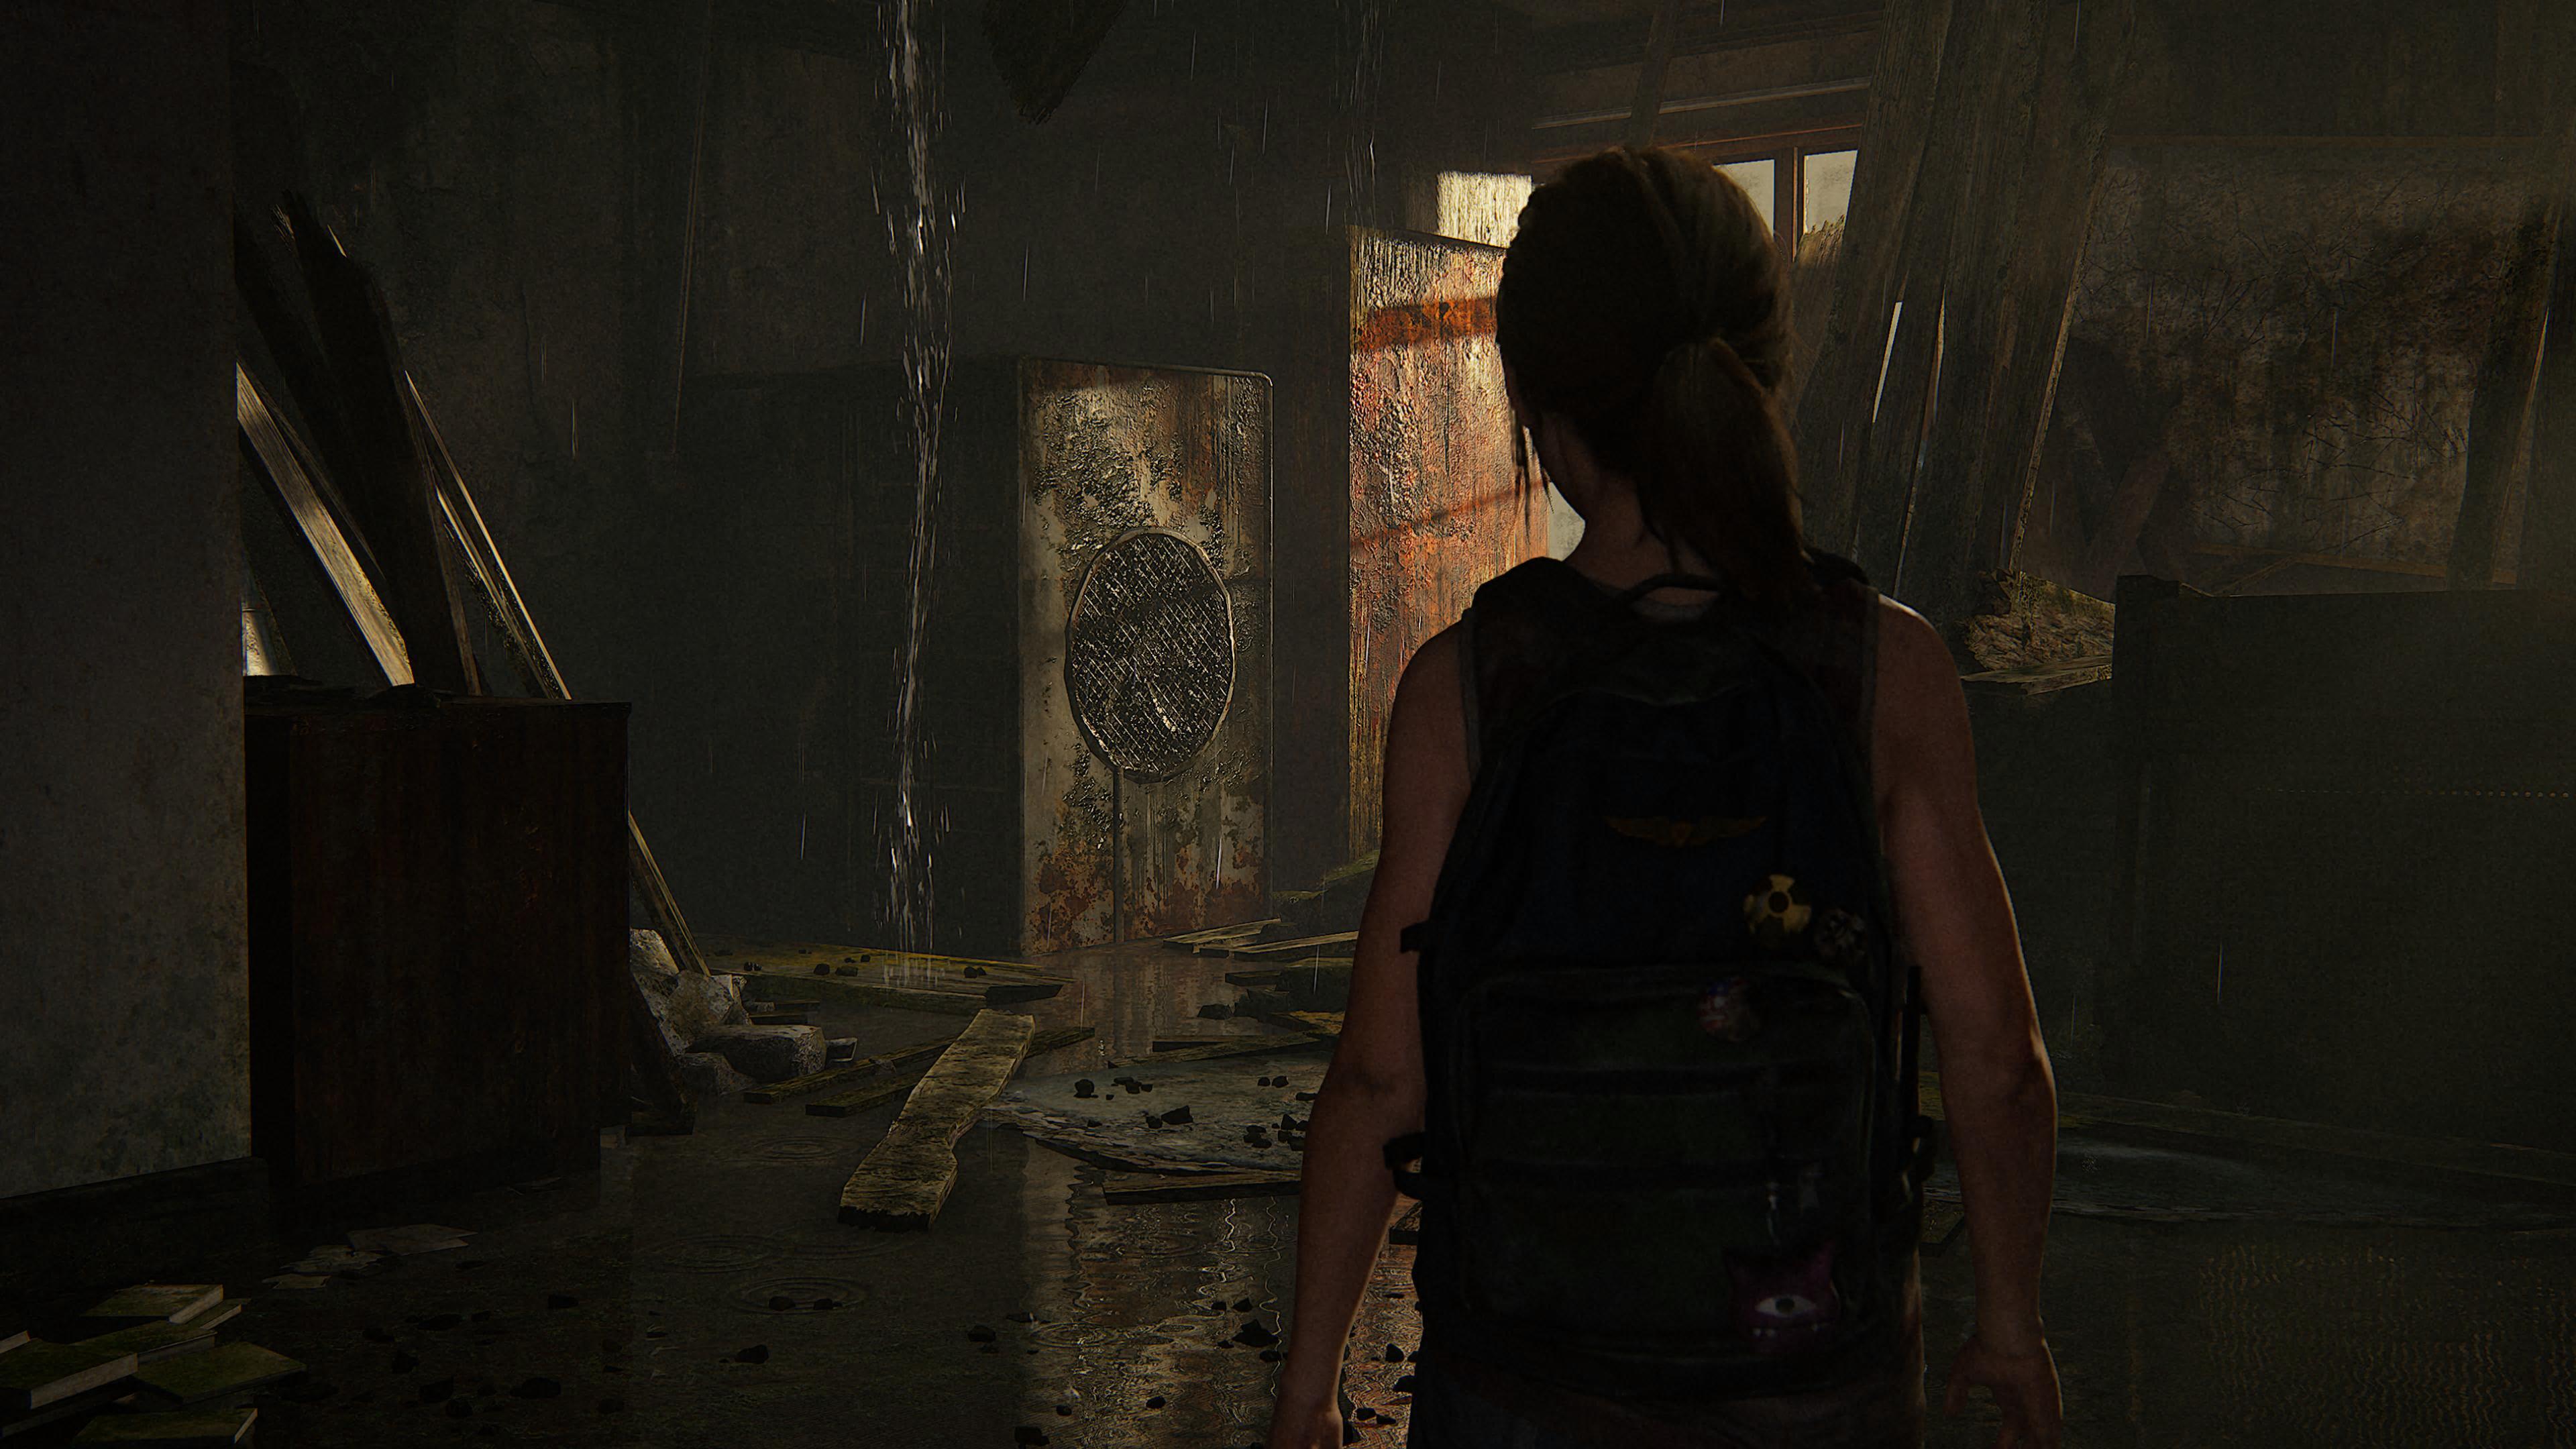 The Last of Us Part 1 PC Review - The Final Verdict 